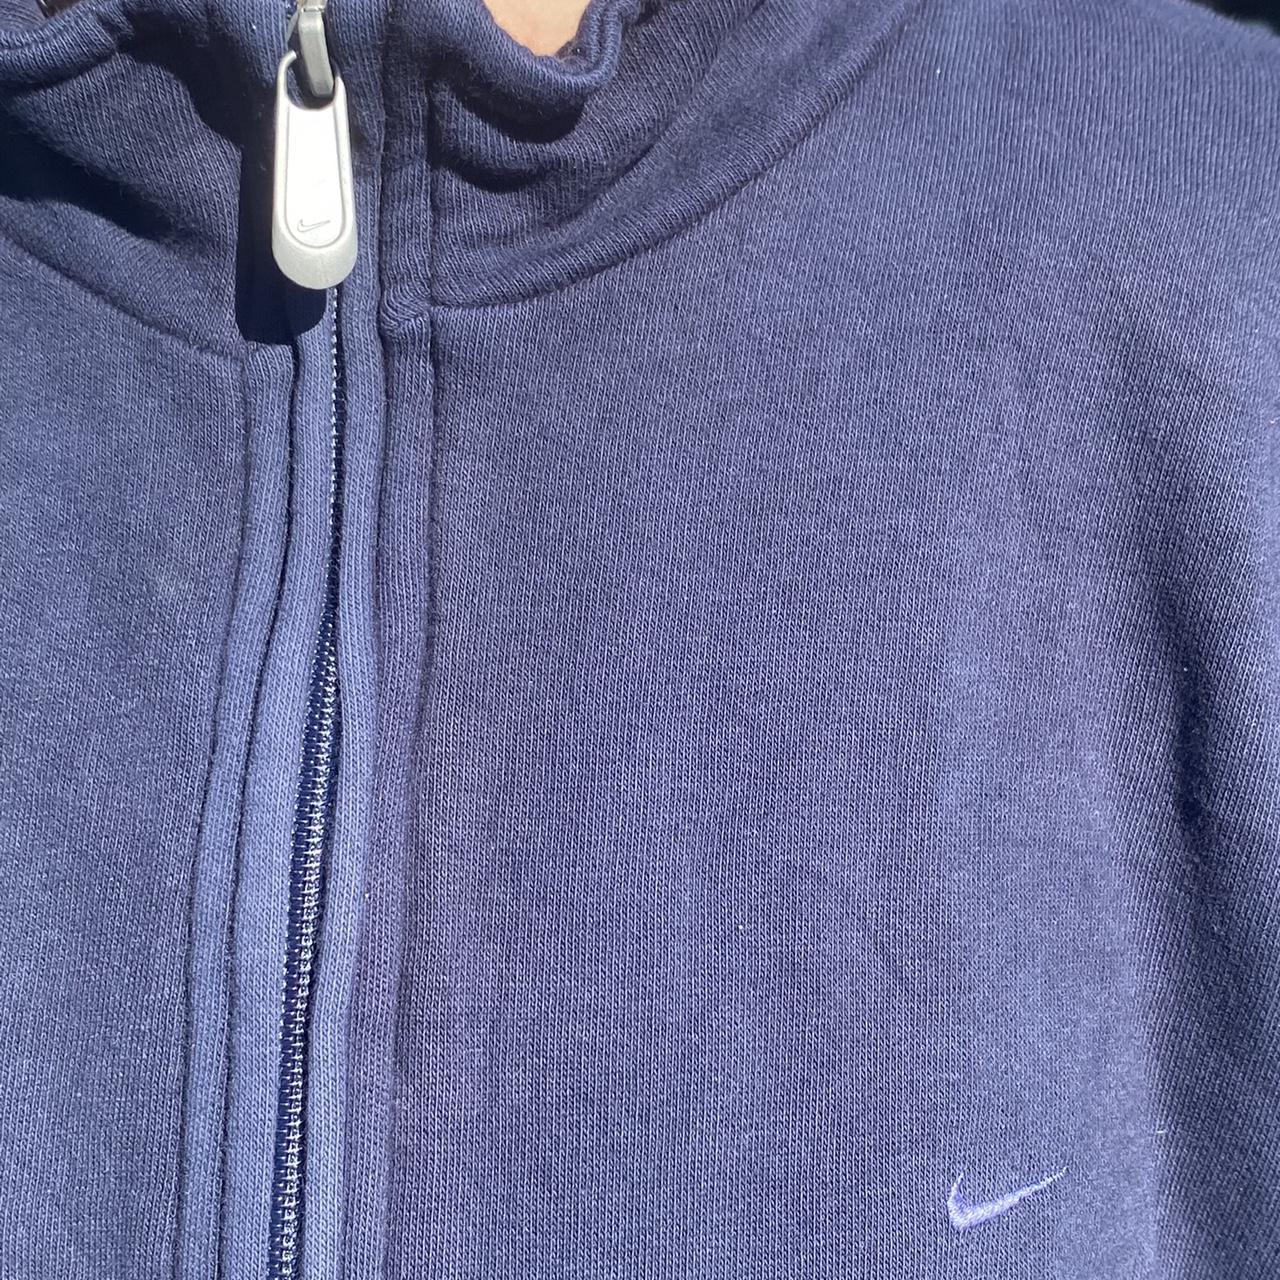 Nike fleece full zip Navy nike with embroidered... - Depop